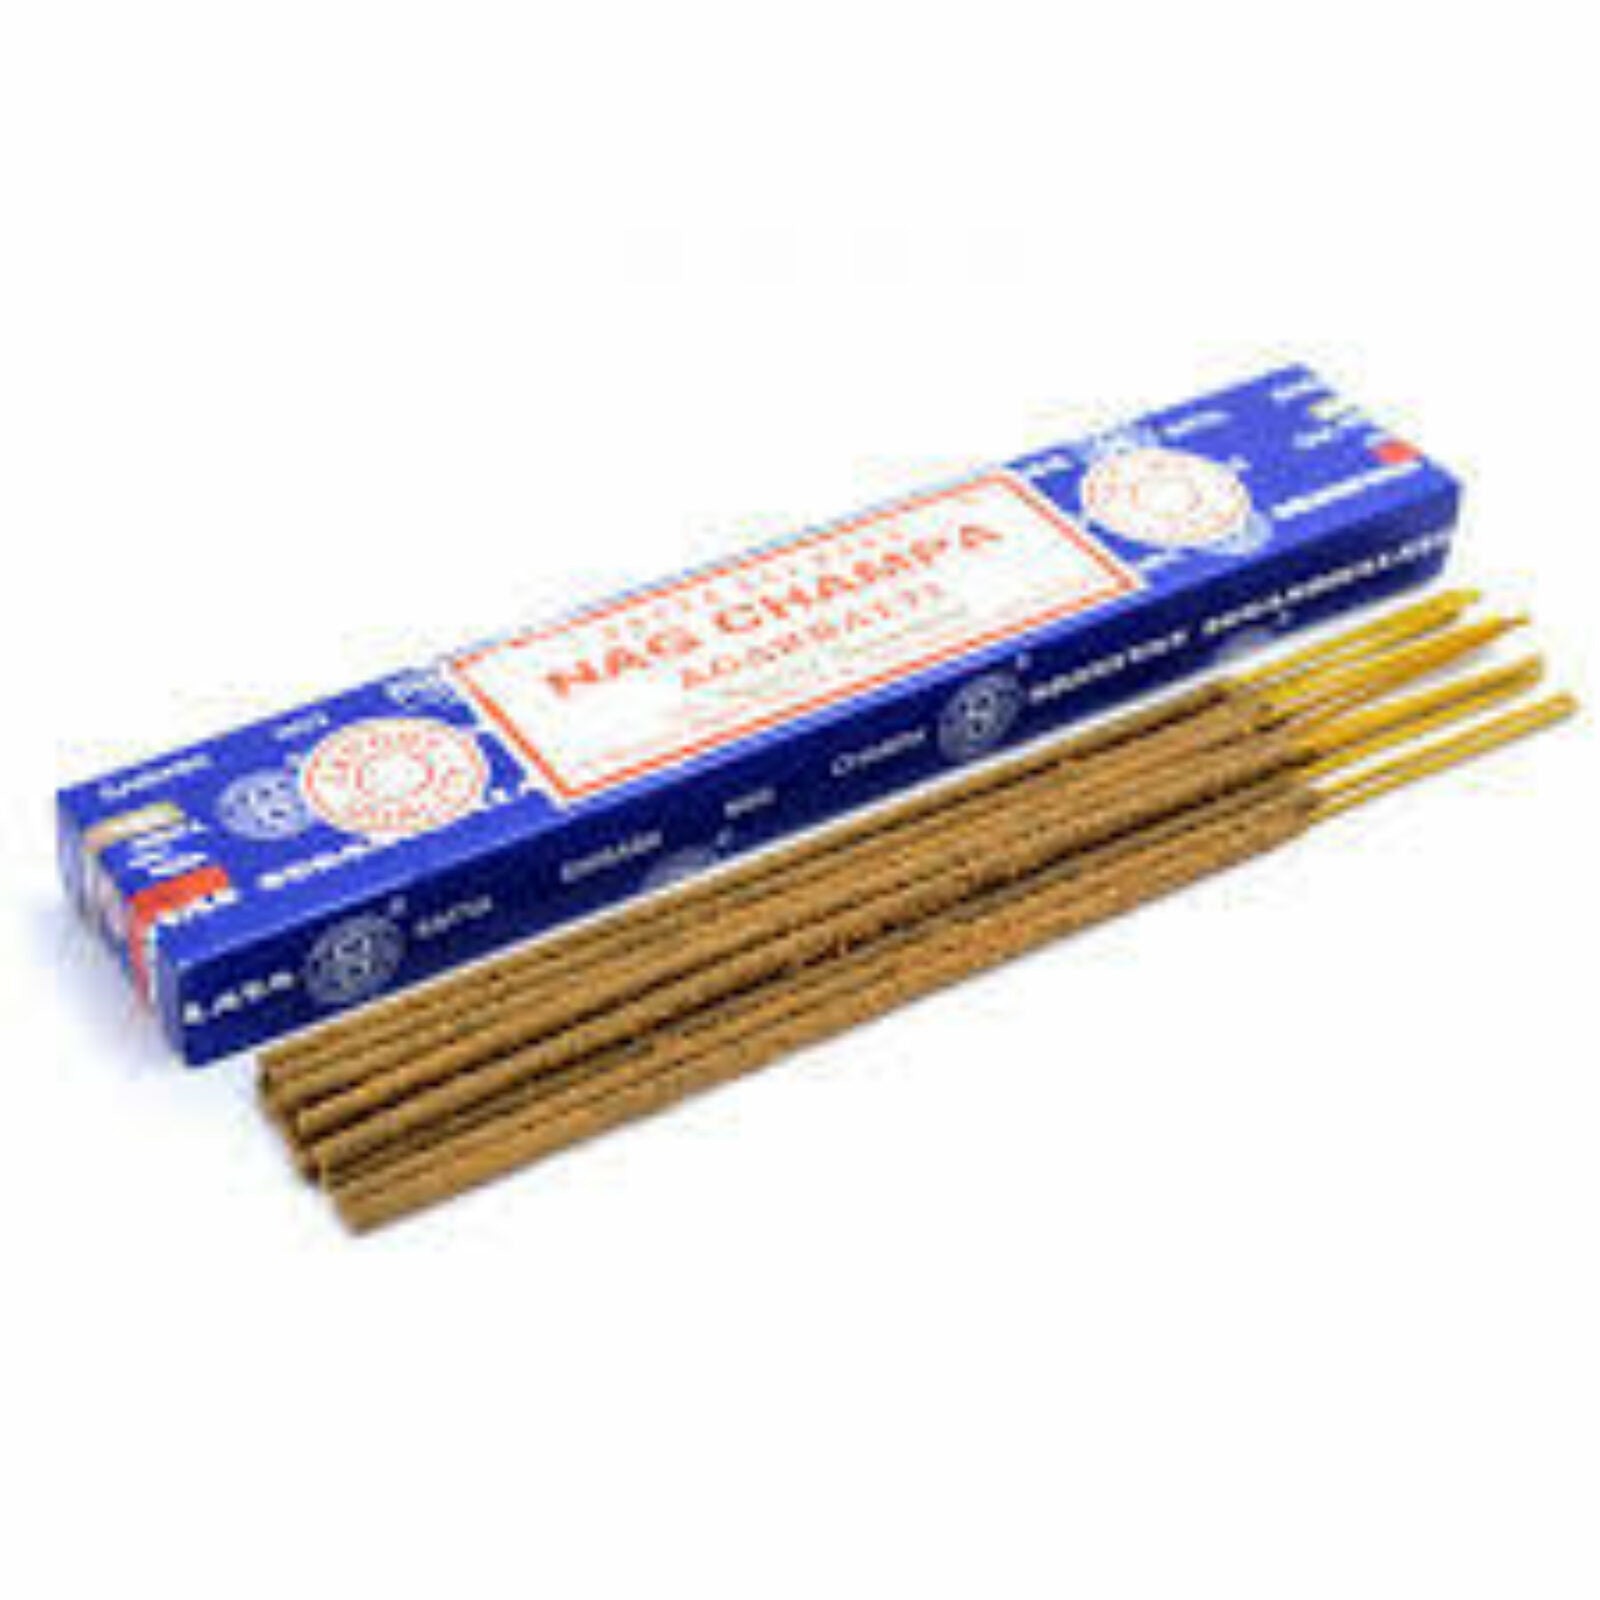 Nag Champa Sticks 15 grams